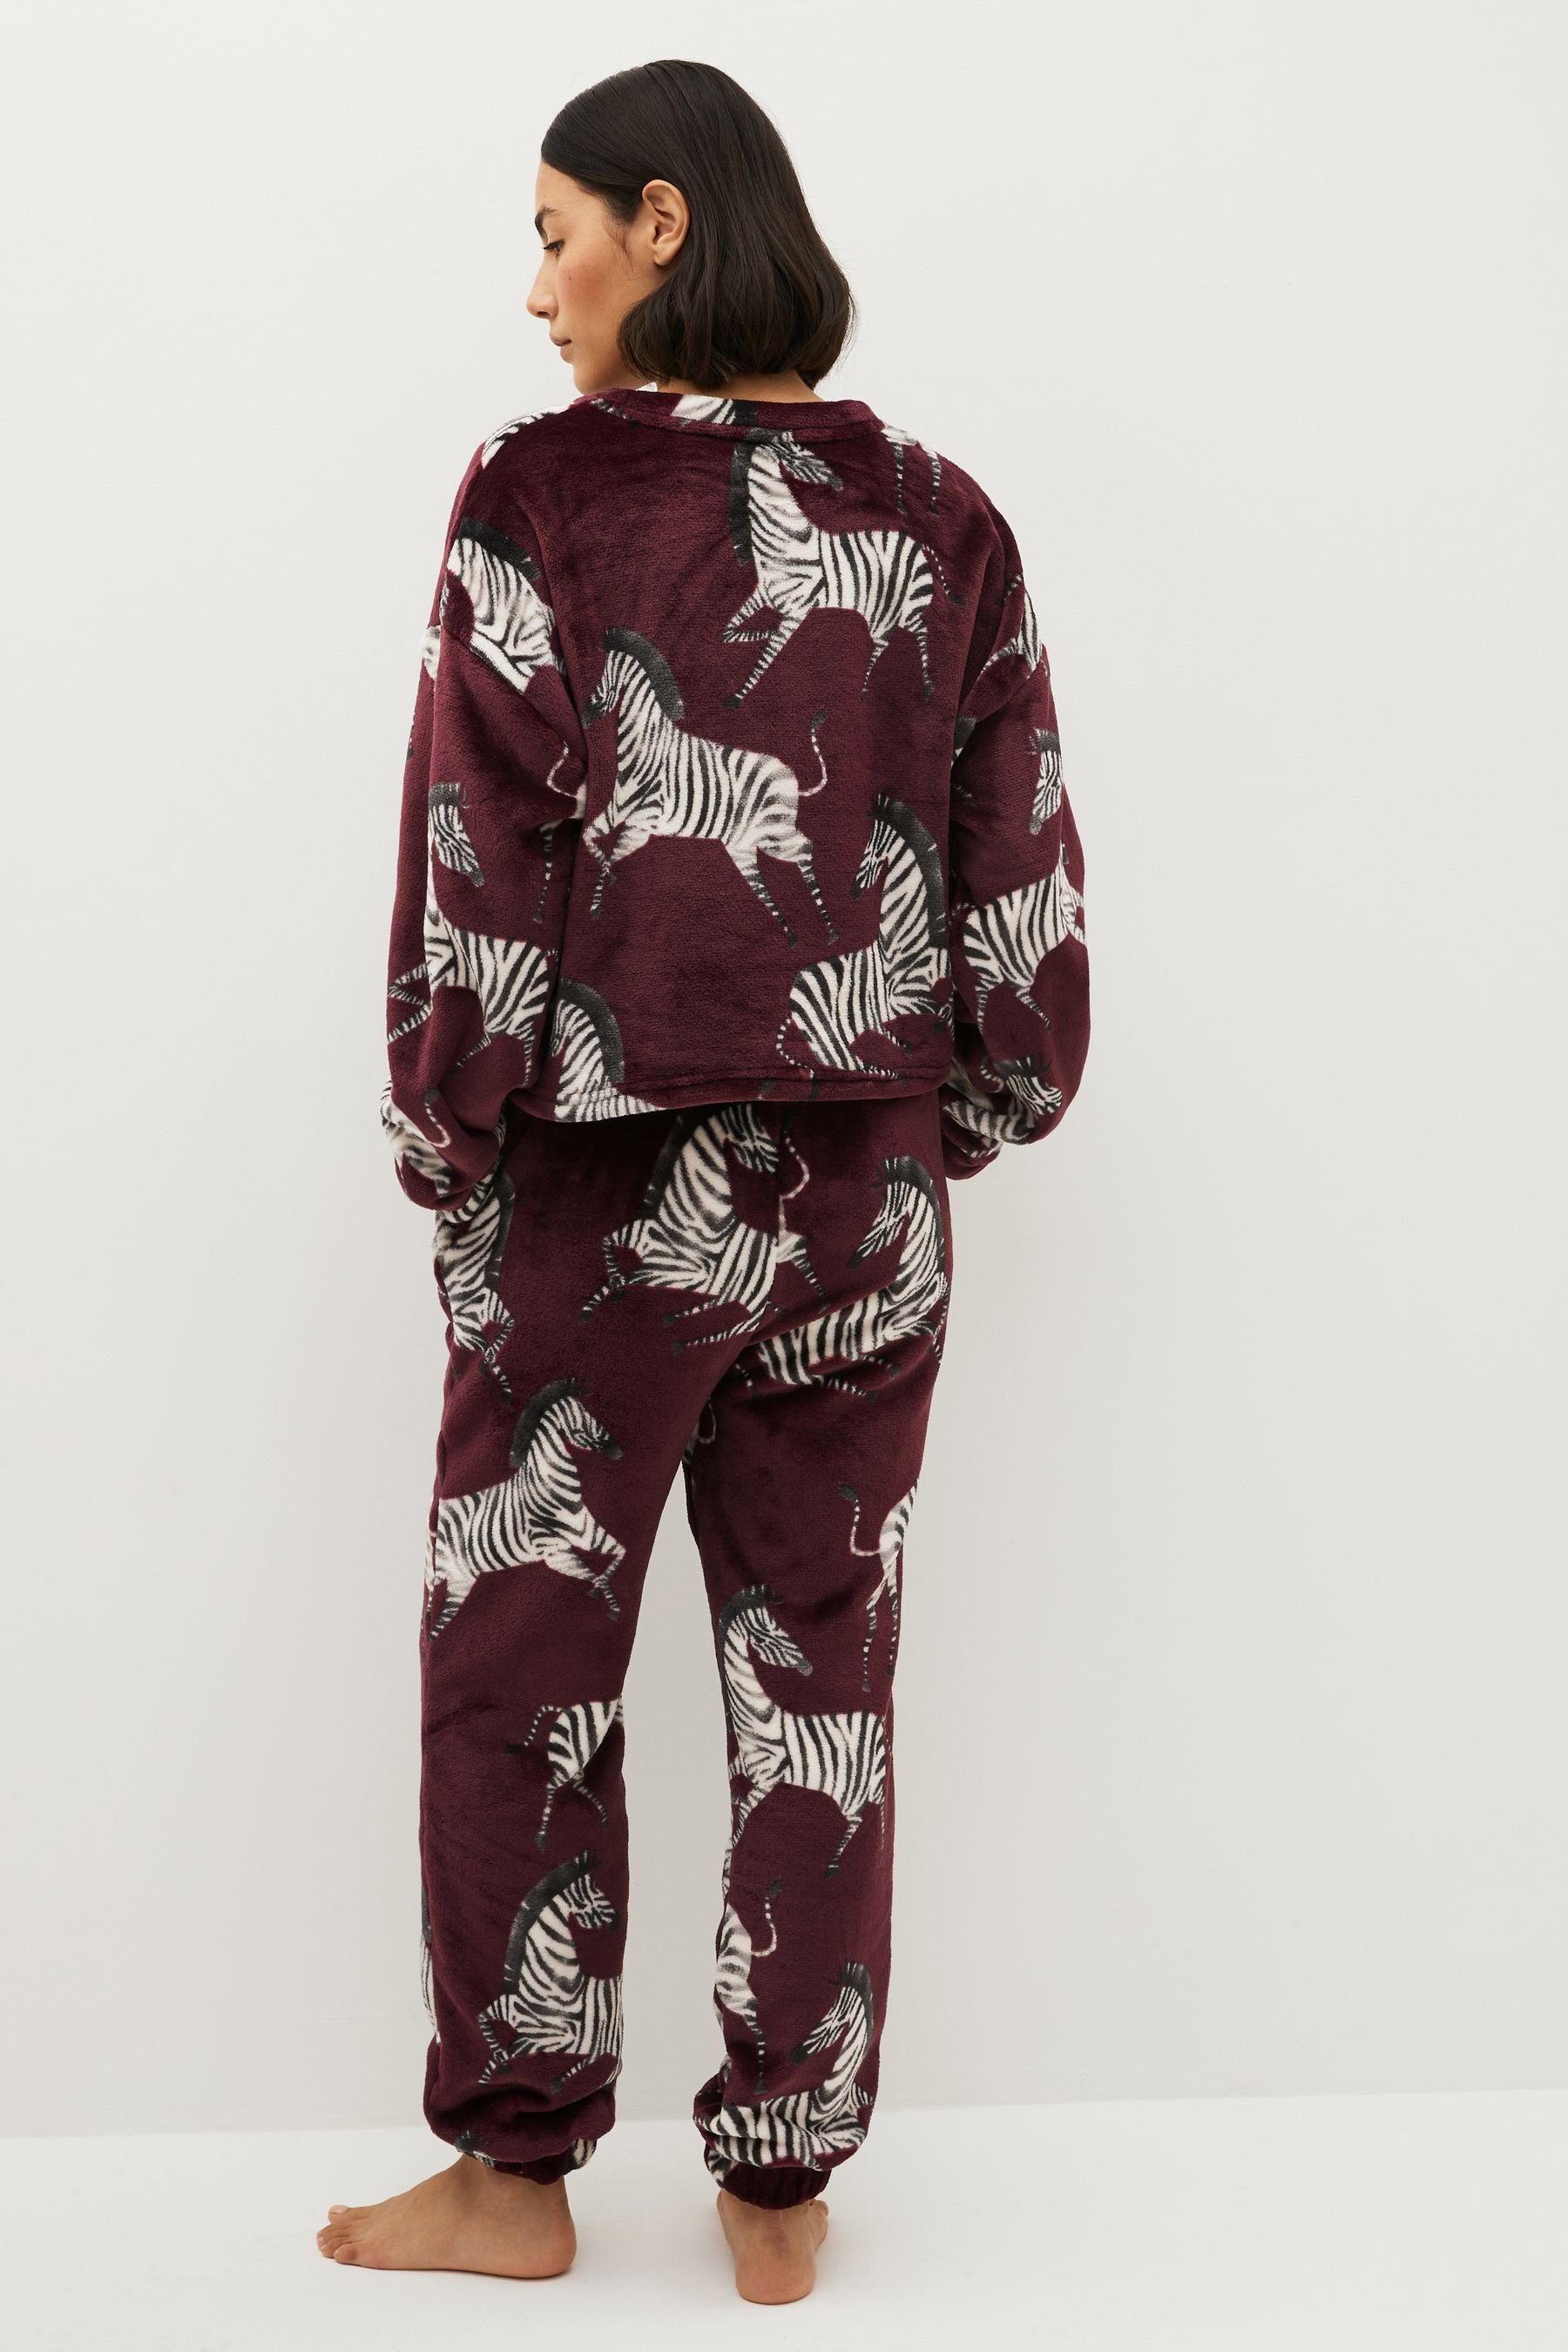 tlg) Next Weiches Zebramuster mit Pyjamaset (2 Pyjama